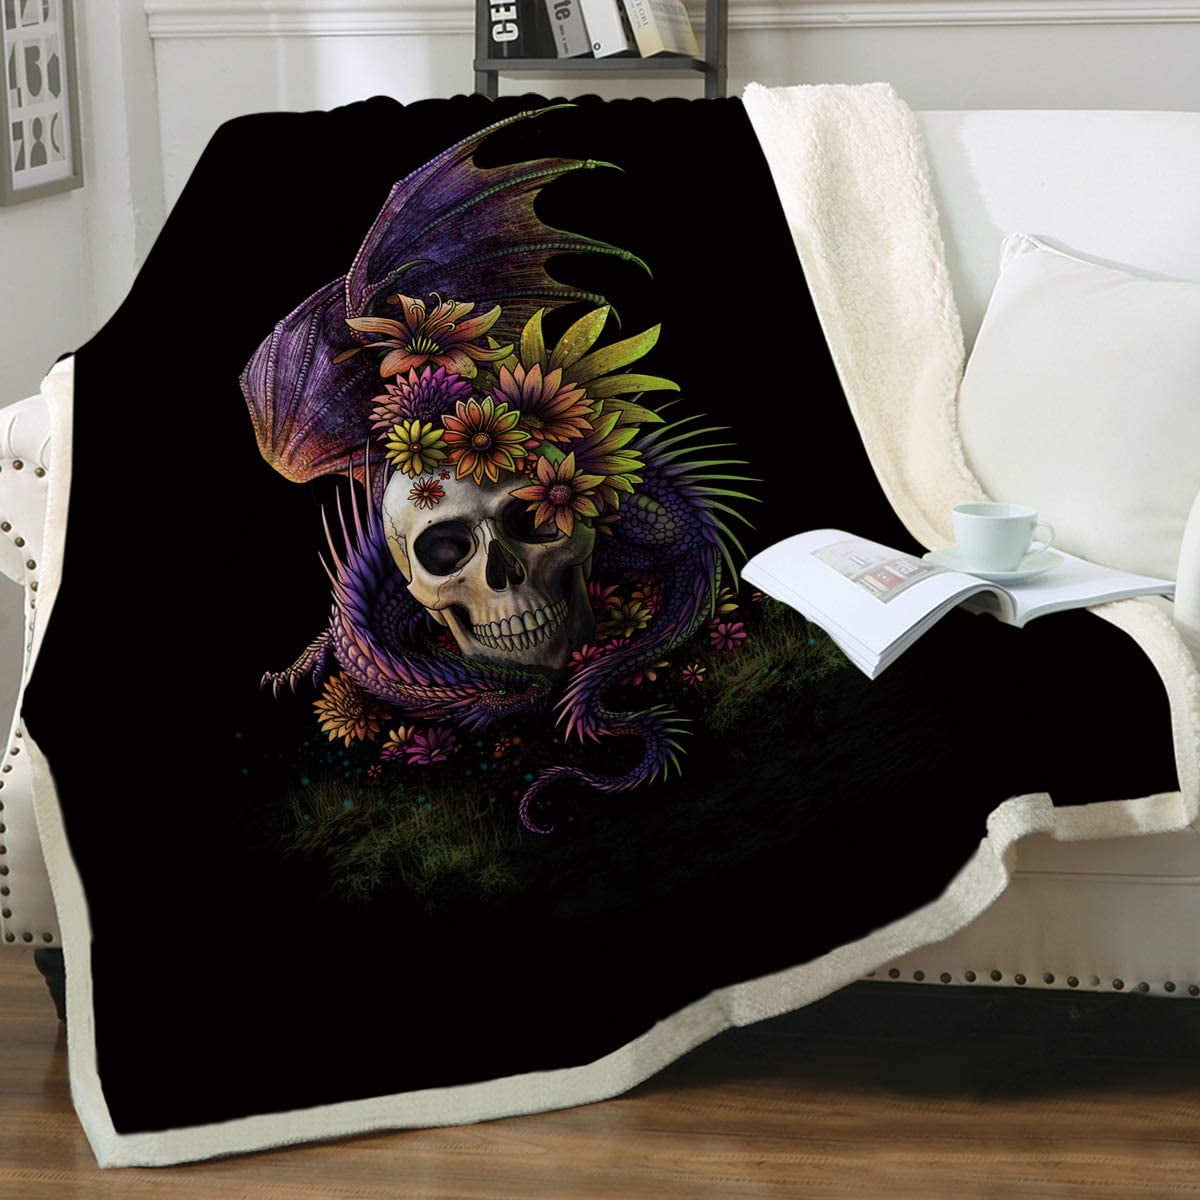 Throw Blanket Sherpa Fleece Blanket Boho Waman Soft Reversible Flannel Blanket Skull Flower Lightweight Blanket for Sofa Bedroom Couch 50x60 Inch